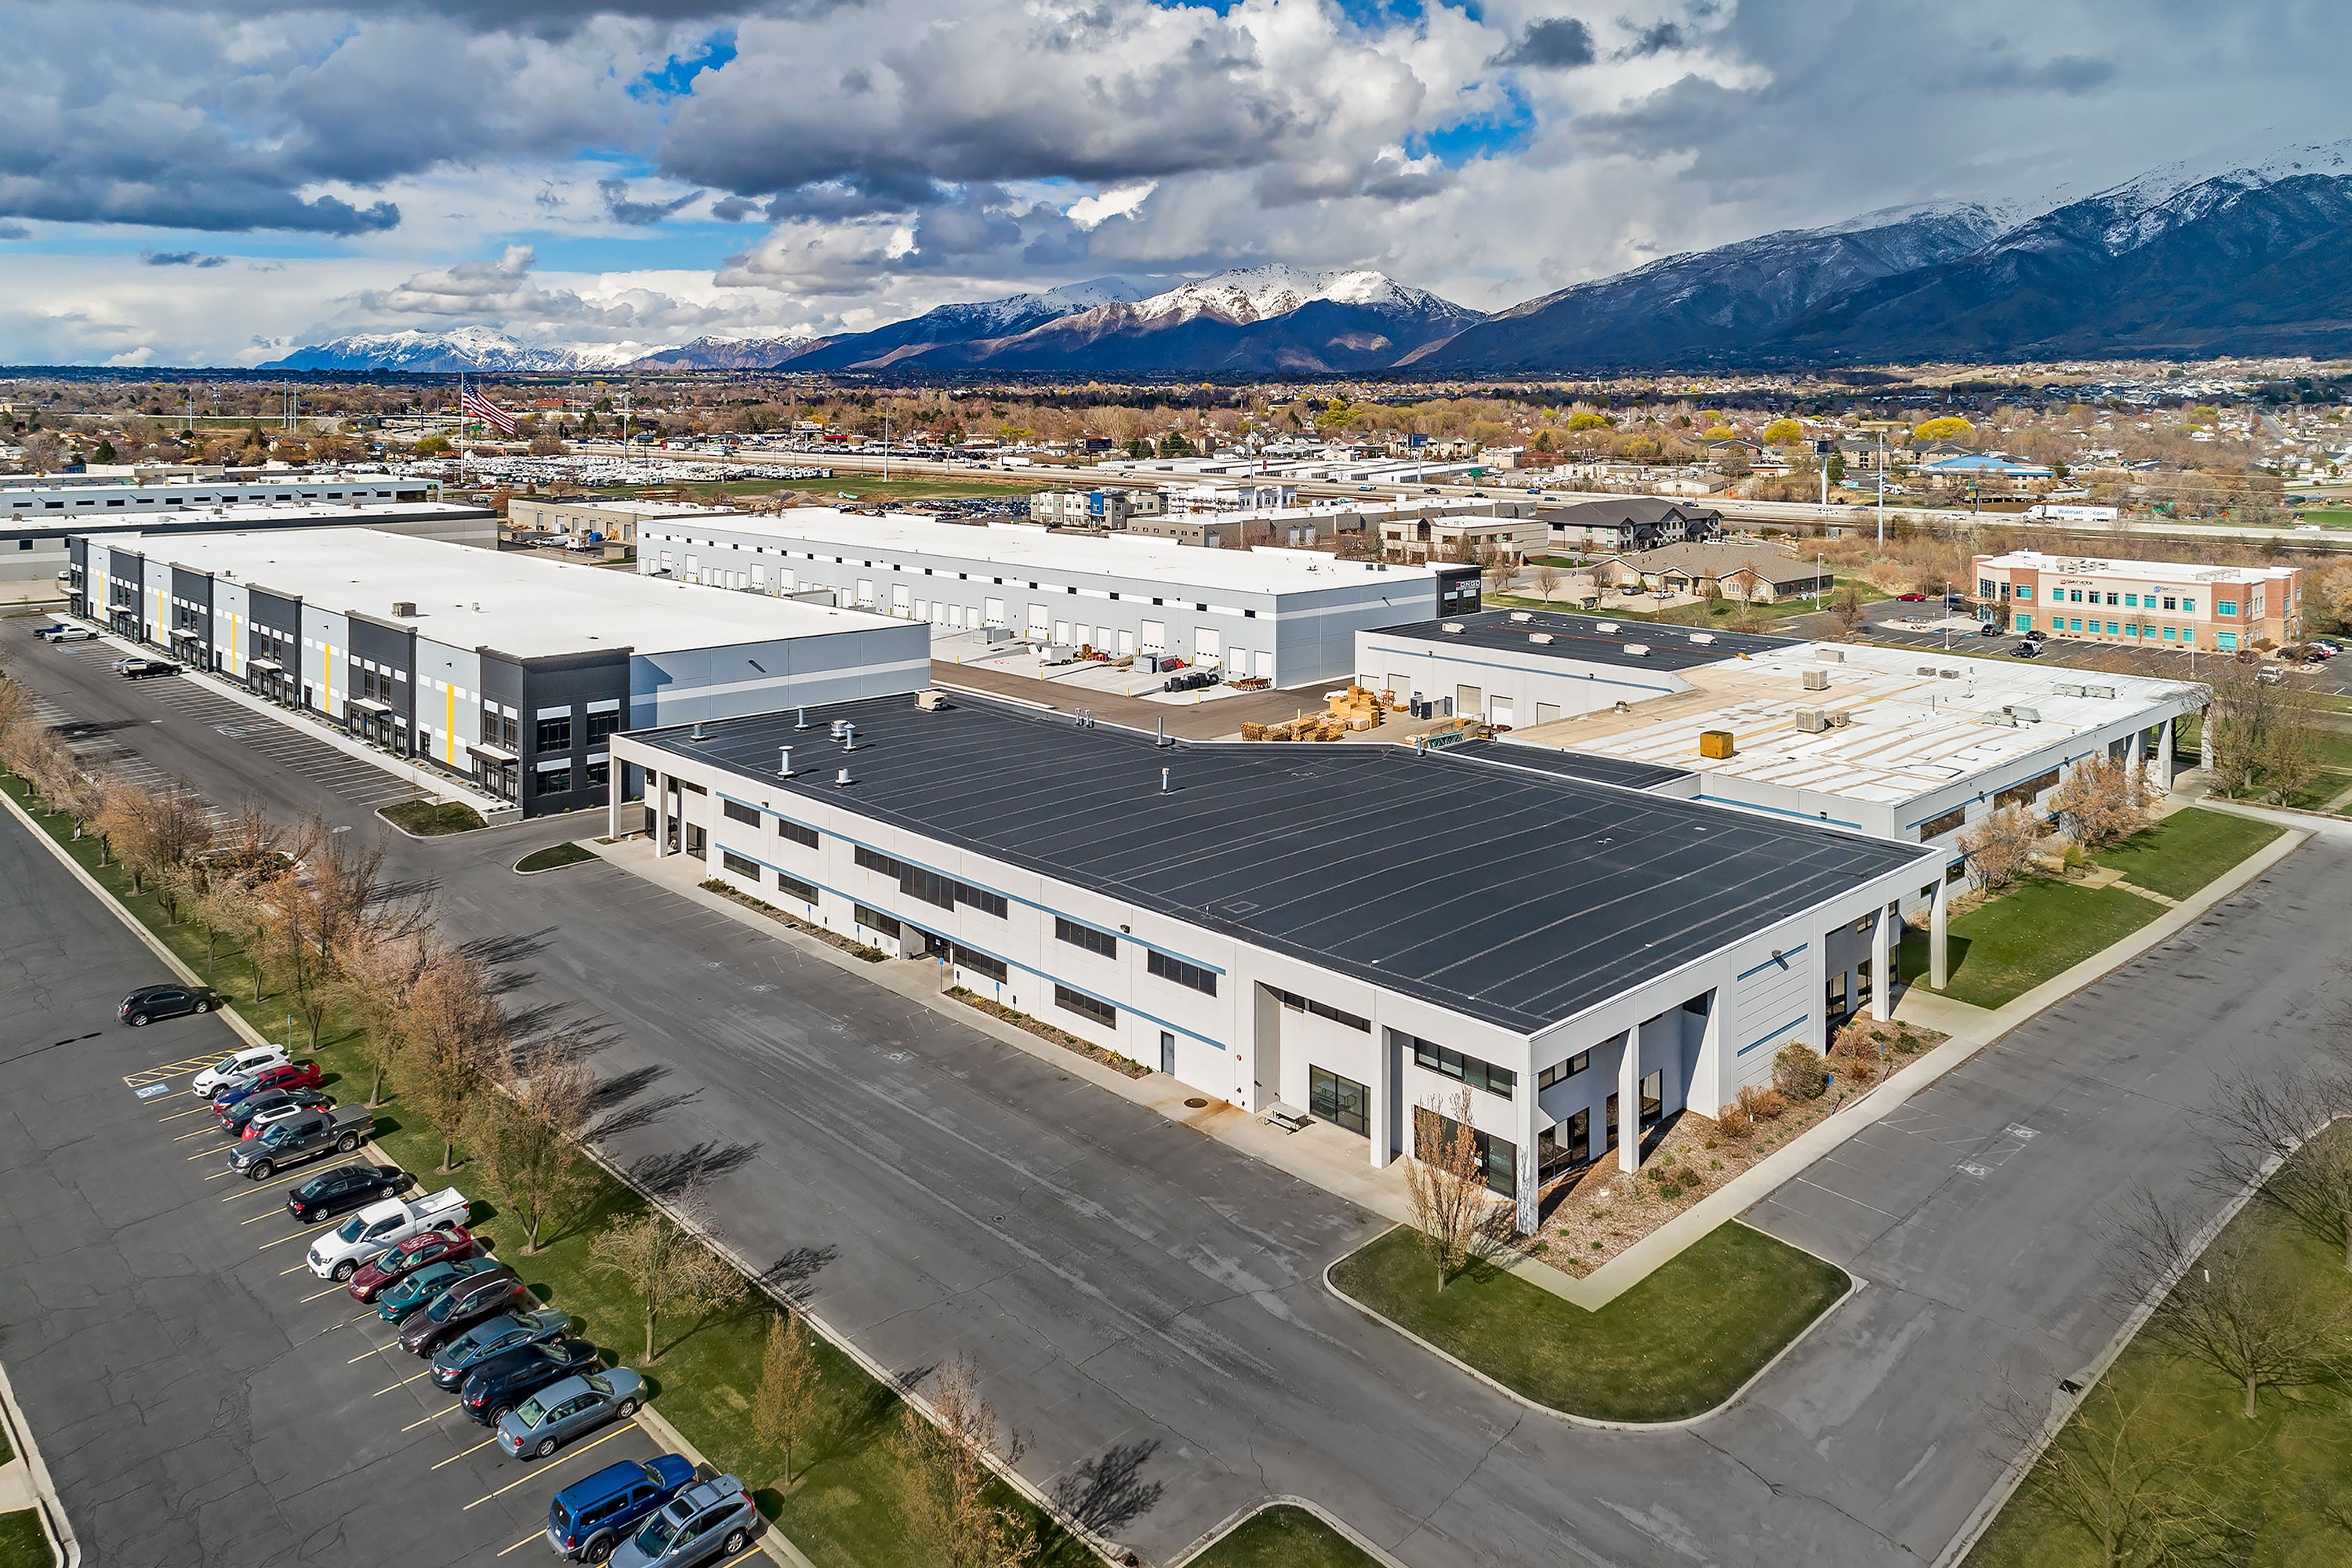 Commercial Buildings - Kaysville, Utah. Aerial Photography by Alan Blakely.